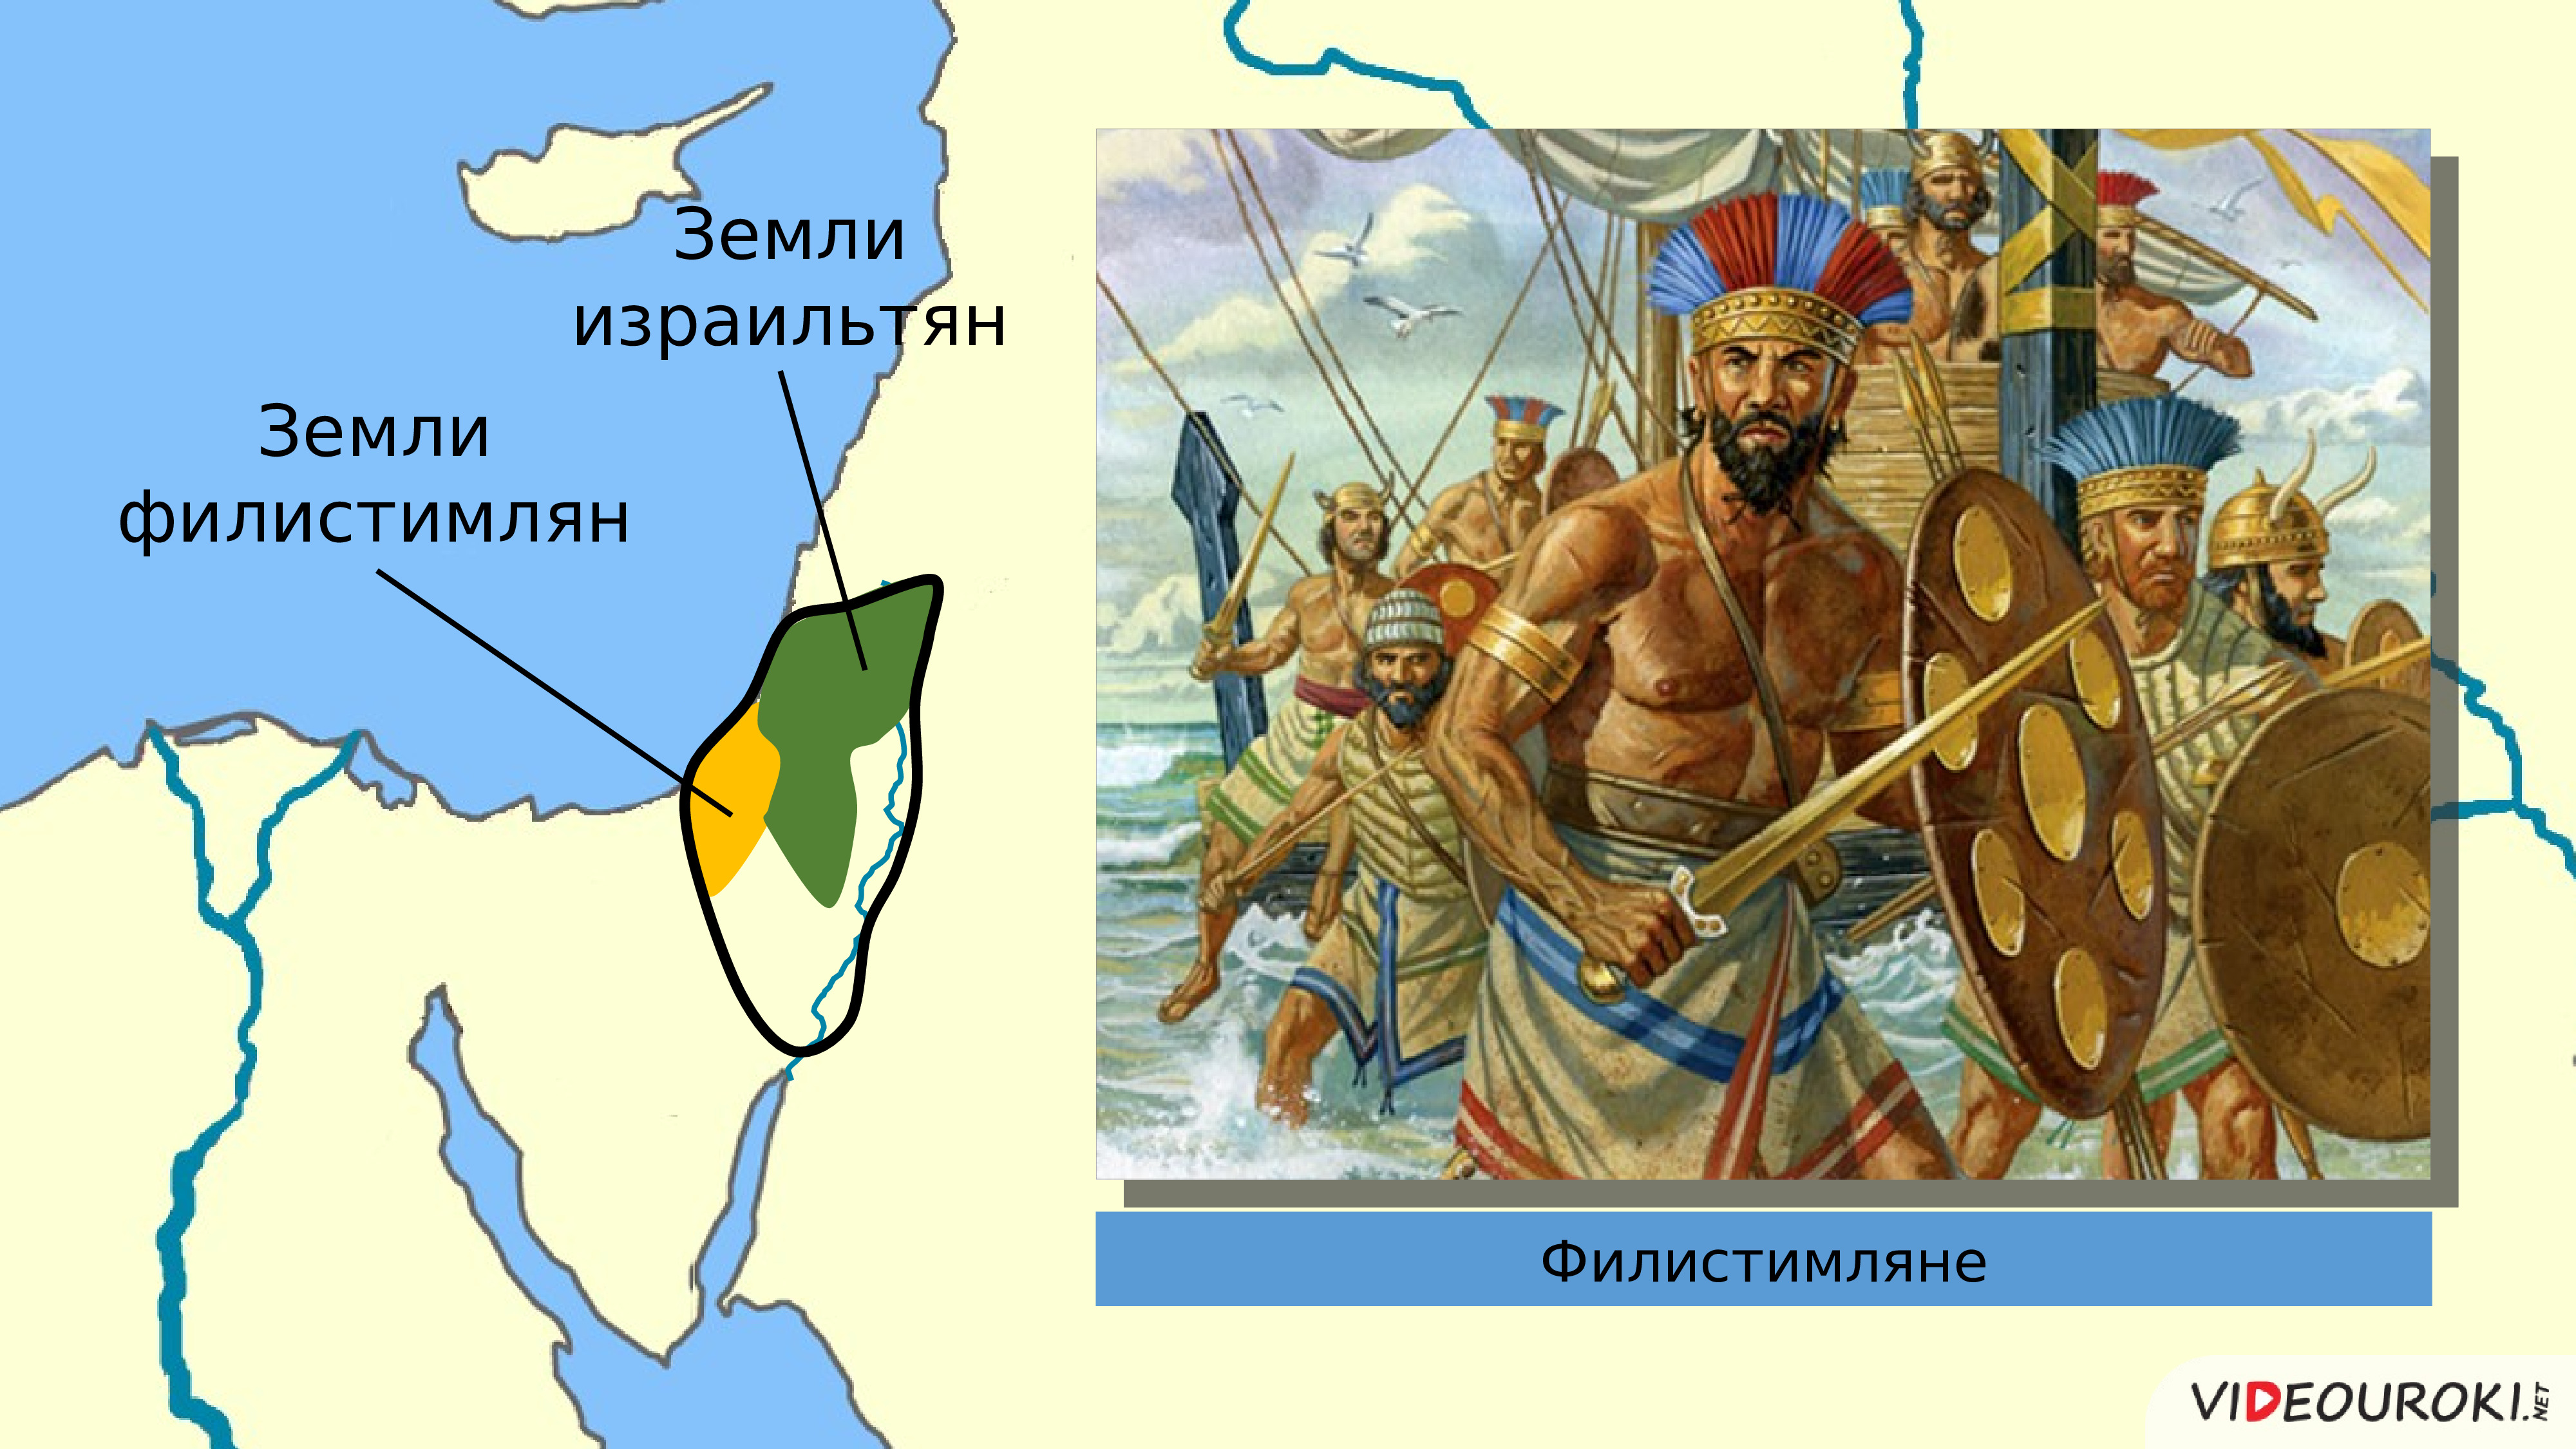 Где живут филистимляне. Филистимляне на карте. Филистимляне где жили. Битва израильтян с филистимлянами. Филистимляне народы.